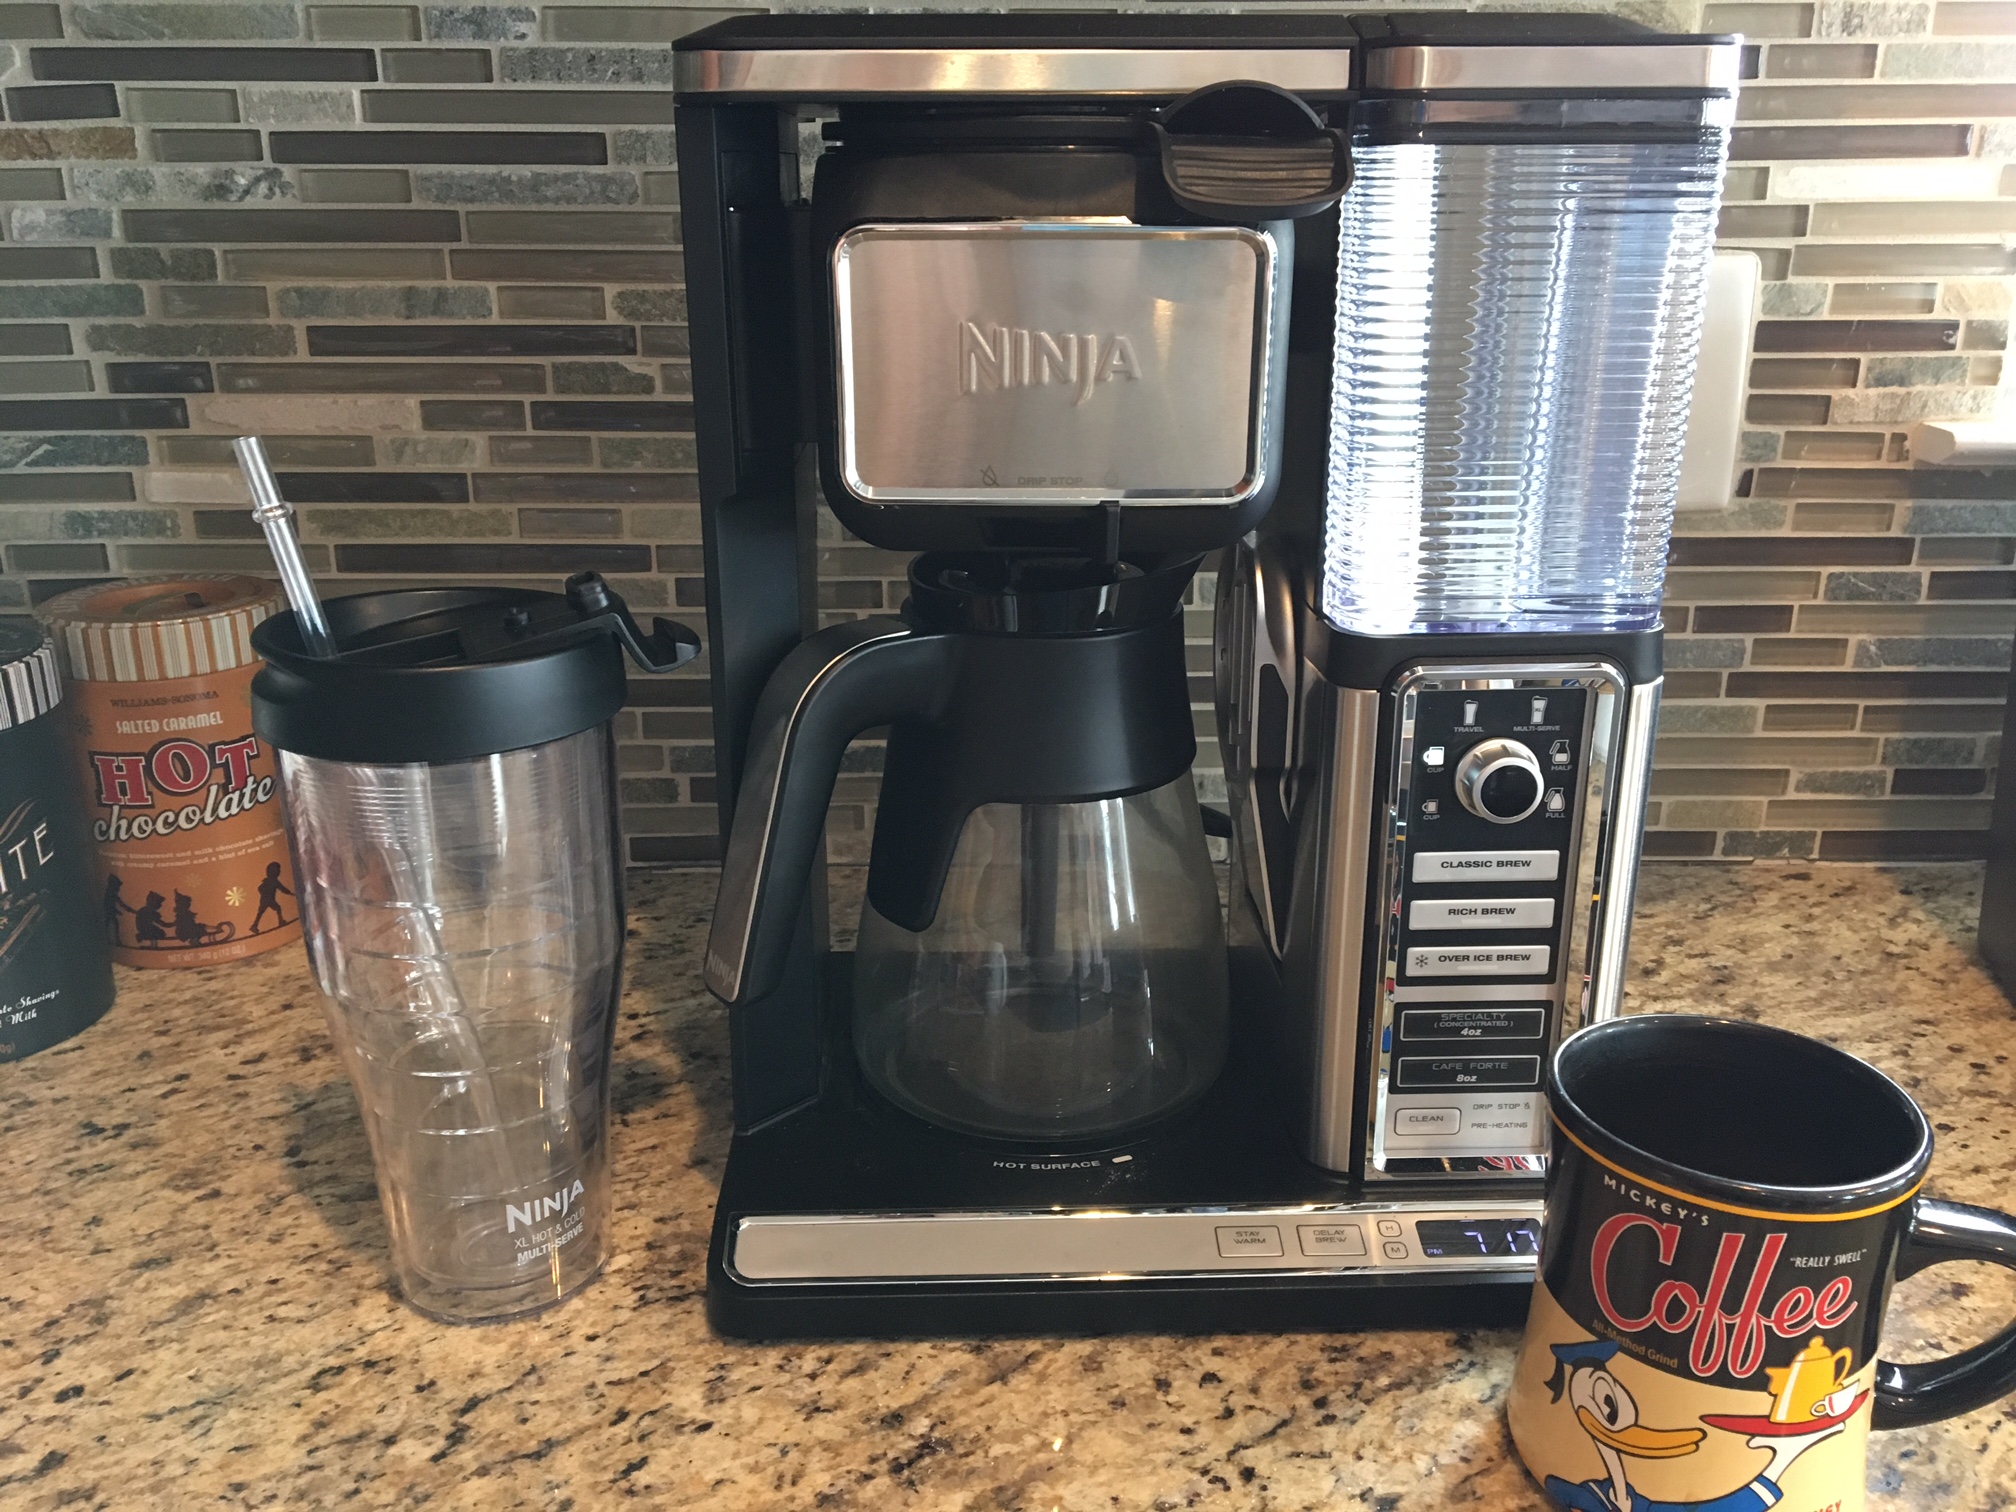 http://wagonpilot.com/wp-content/uploads/2016/12/Ninja-Coffee-Bar.jpg